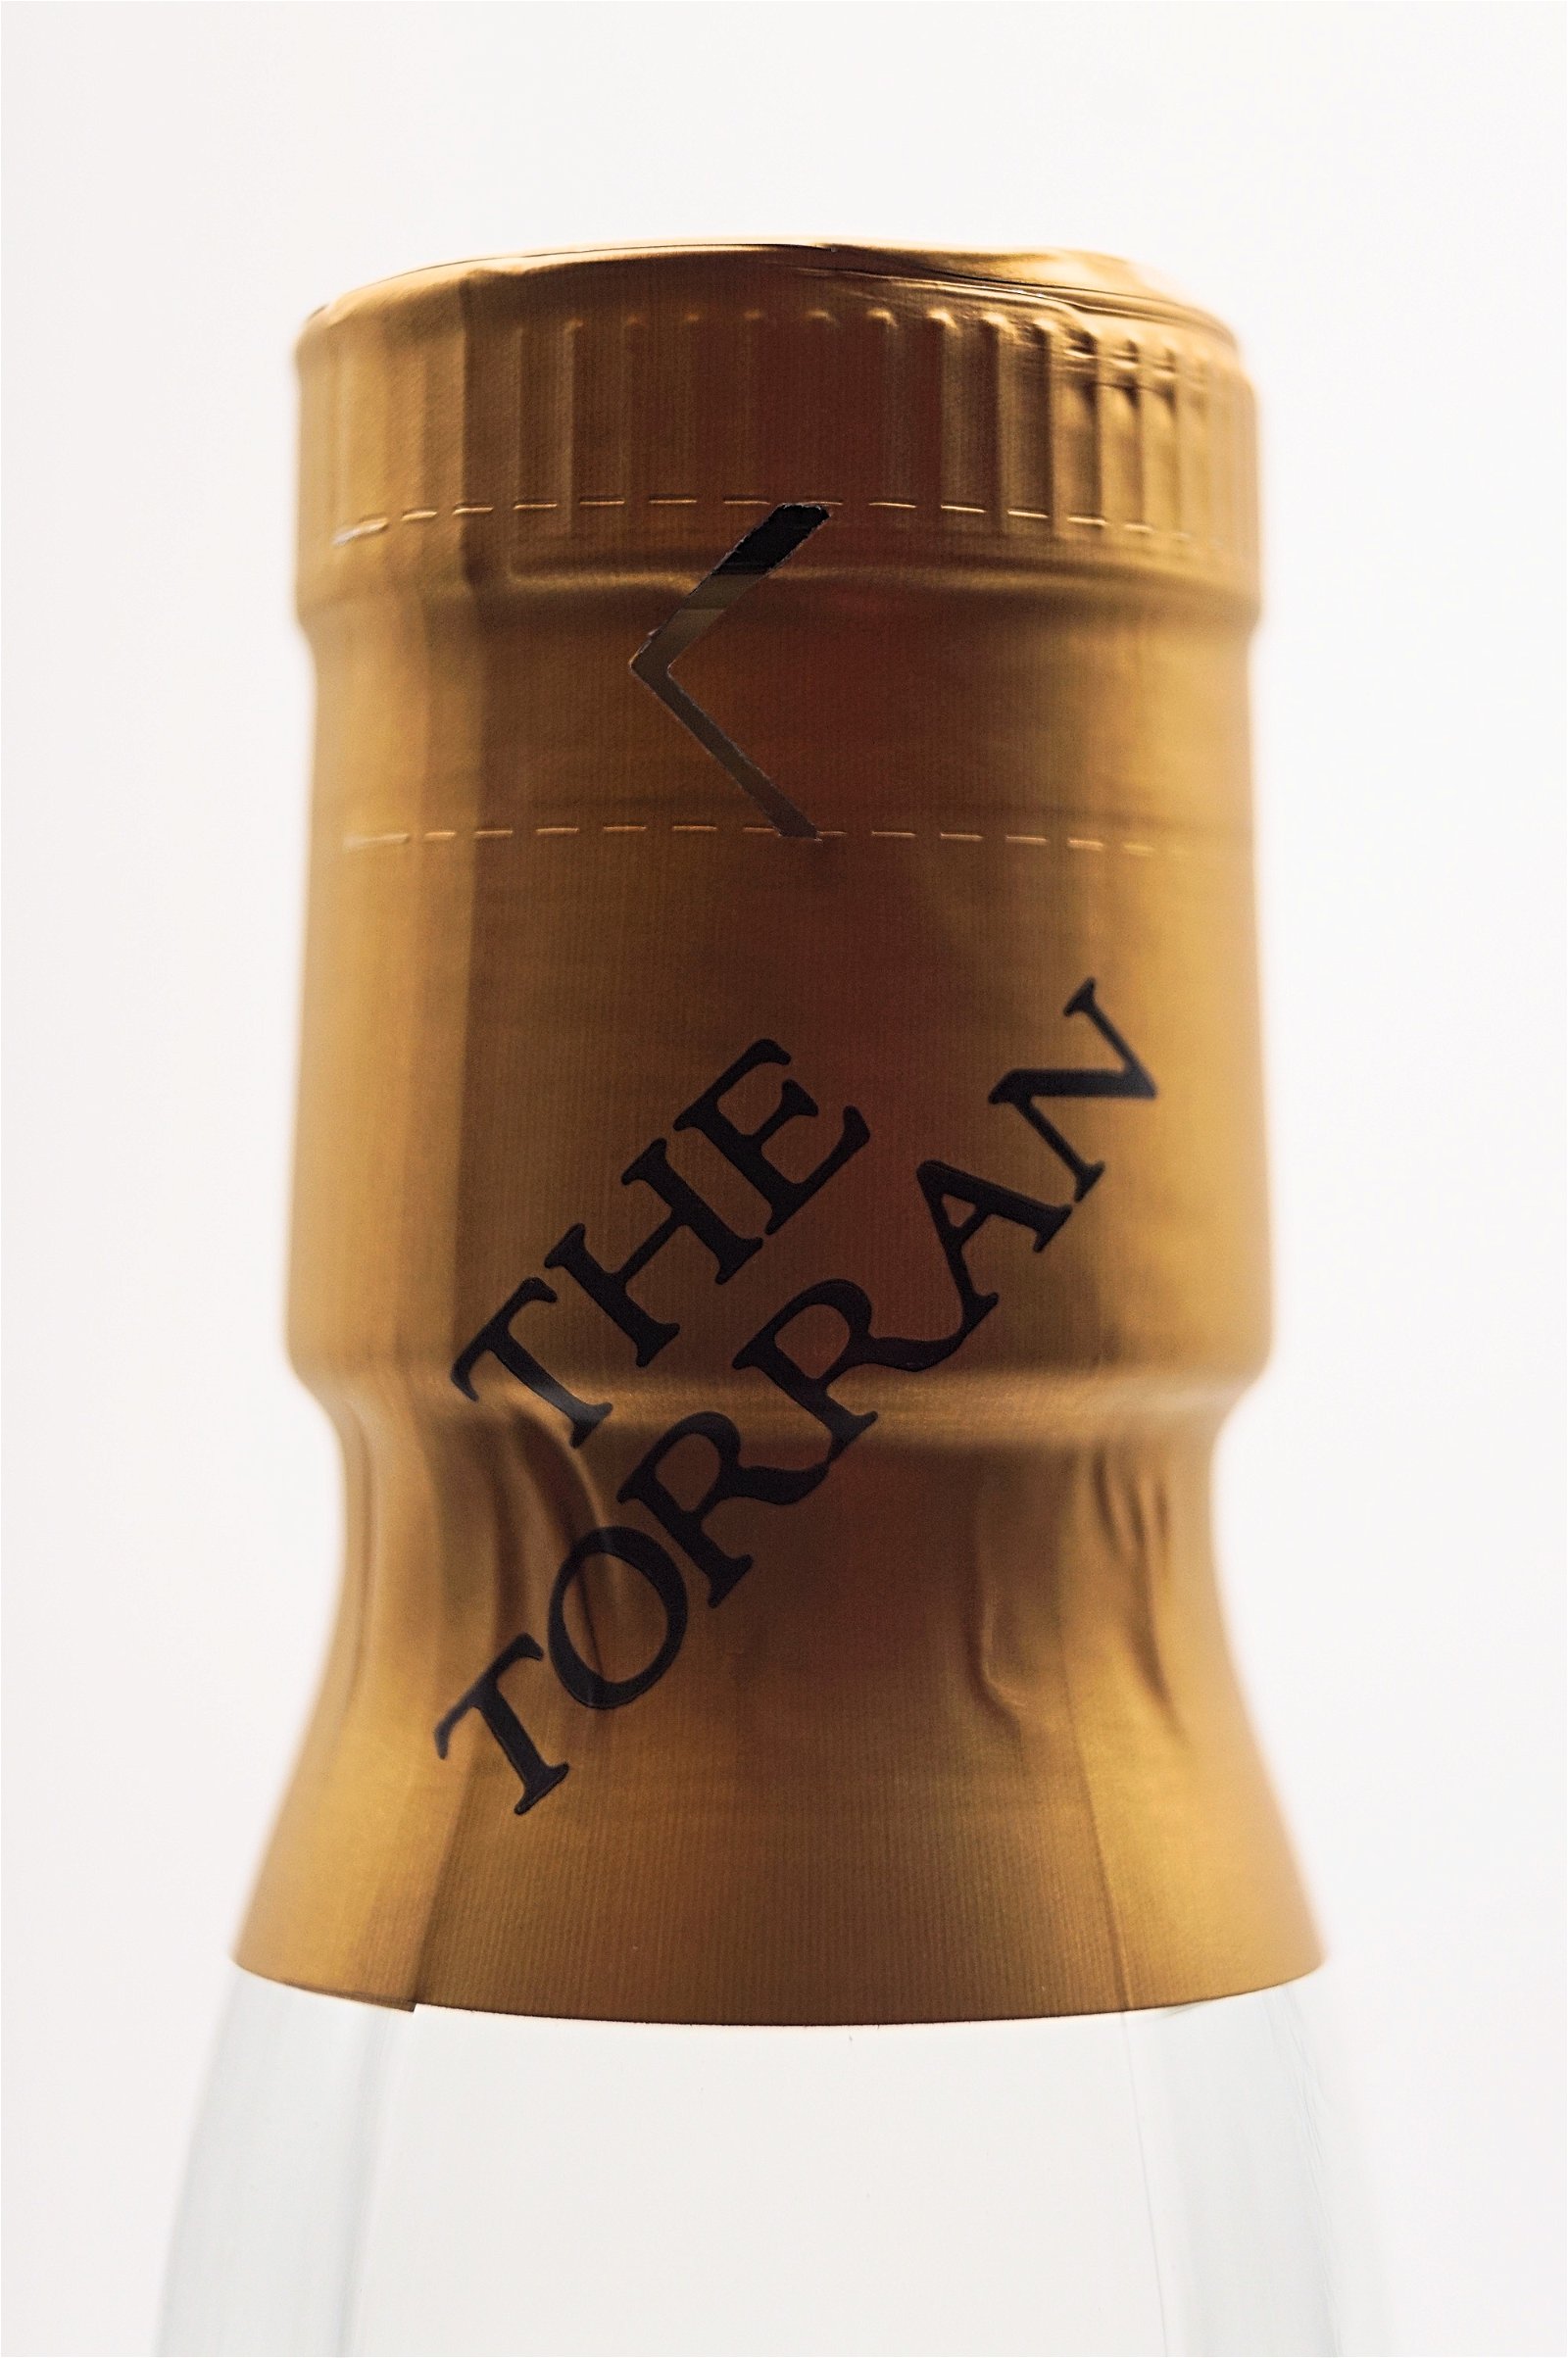 The Torran Sauternes Cask Finish Highland Single Malt Scotch Whisky